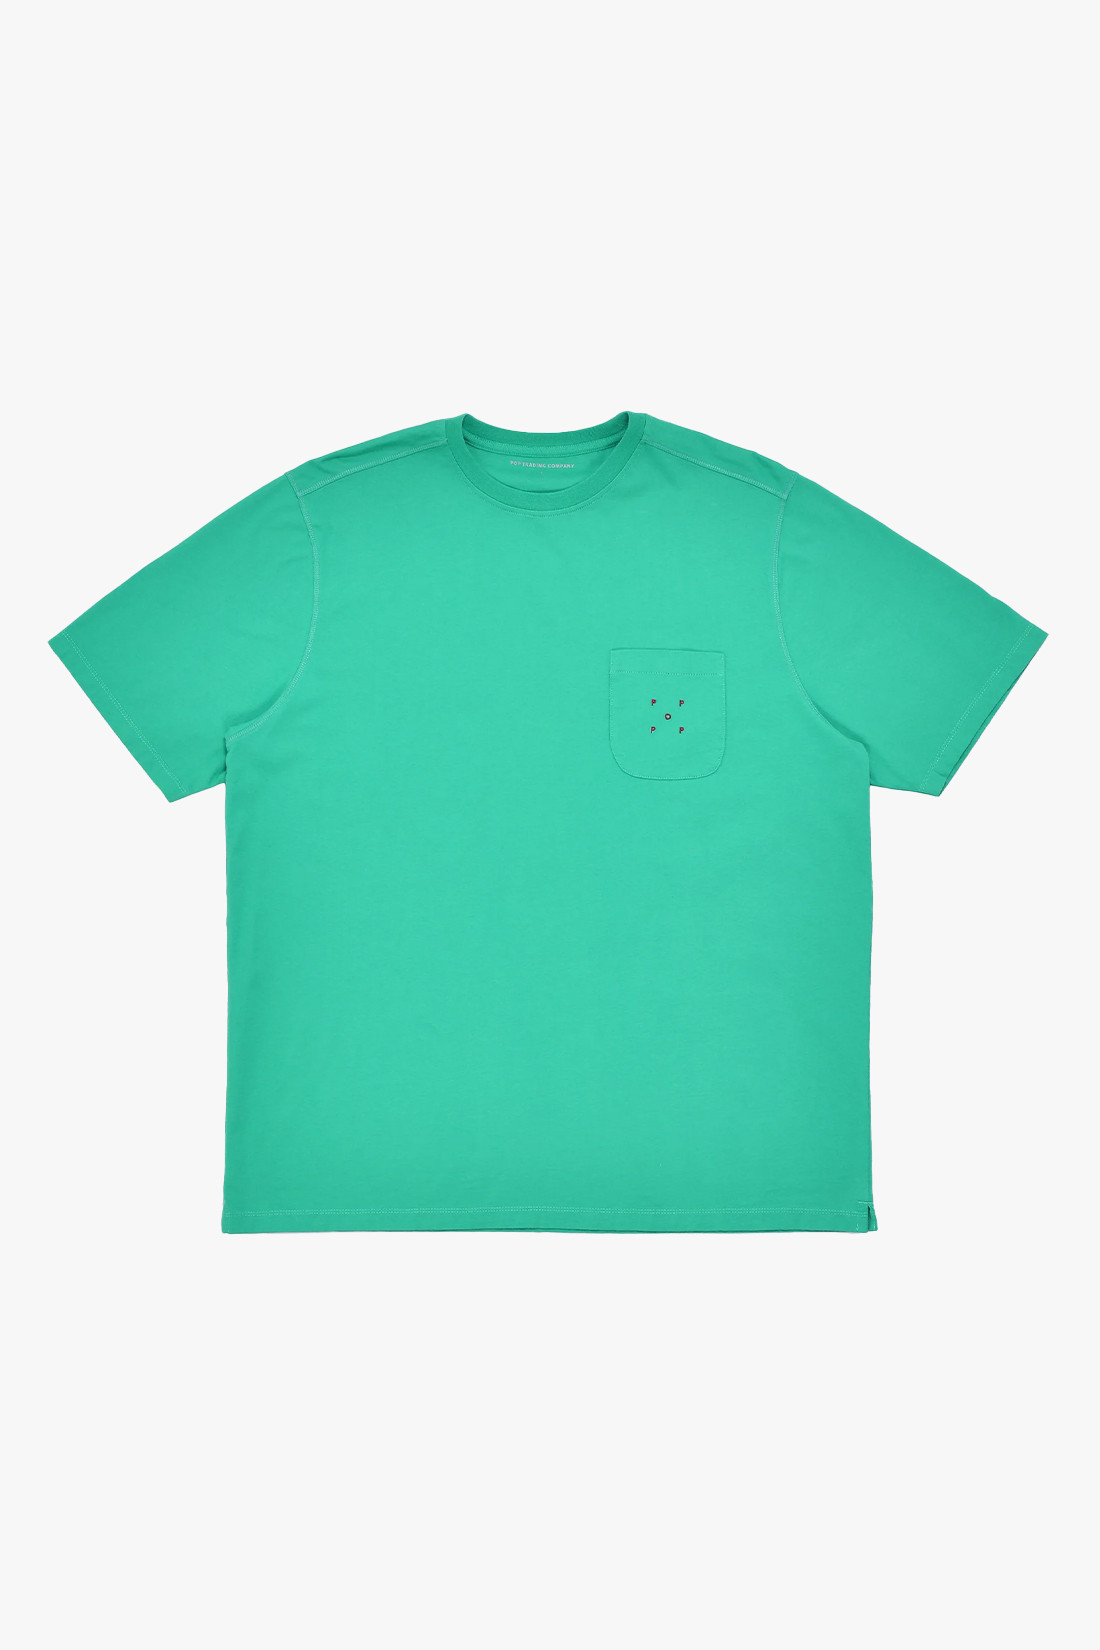 Pocket t-shirt Peacock green/rio re